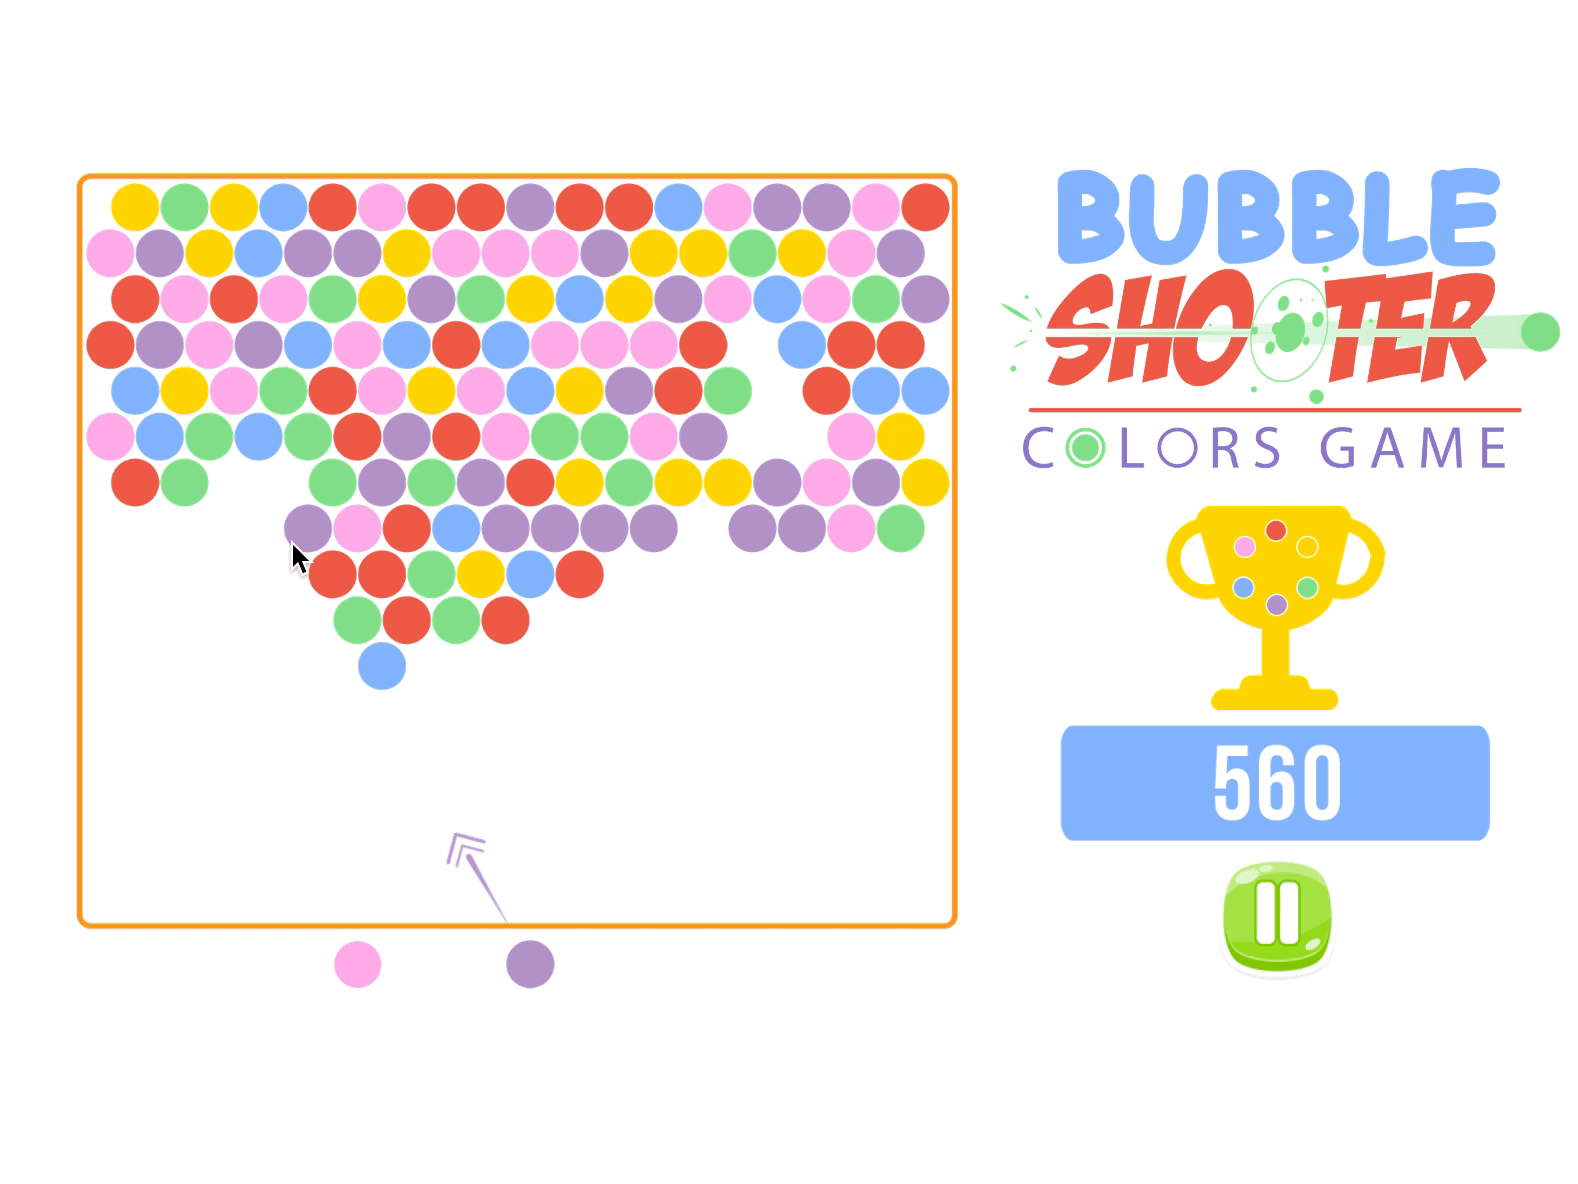 Bubble Shooter Colors Game Screenshot 4